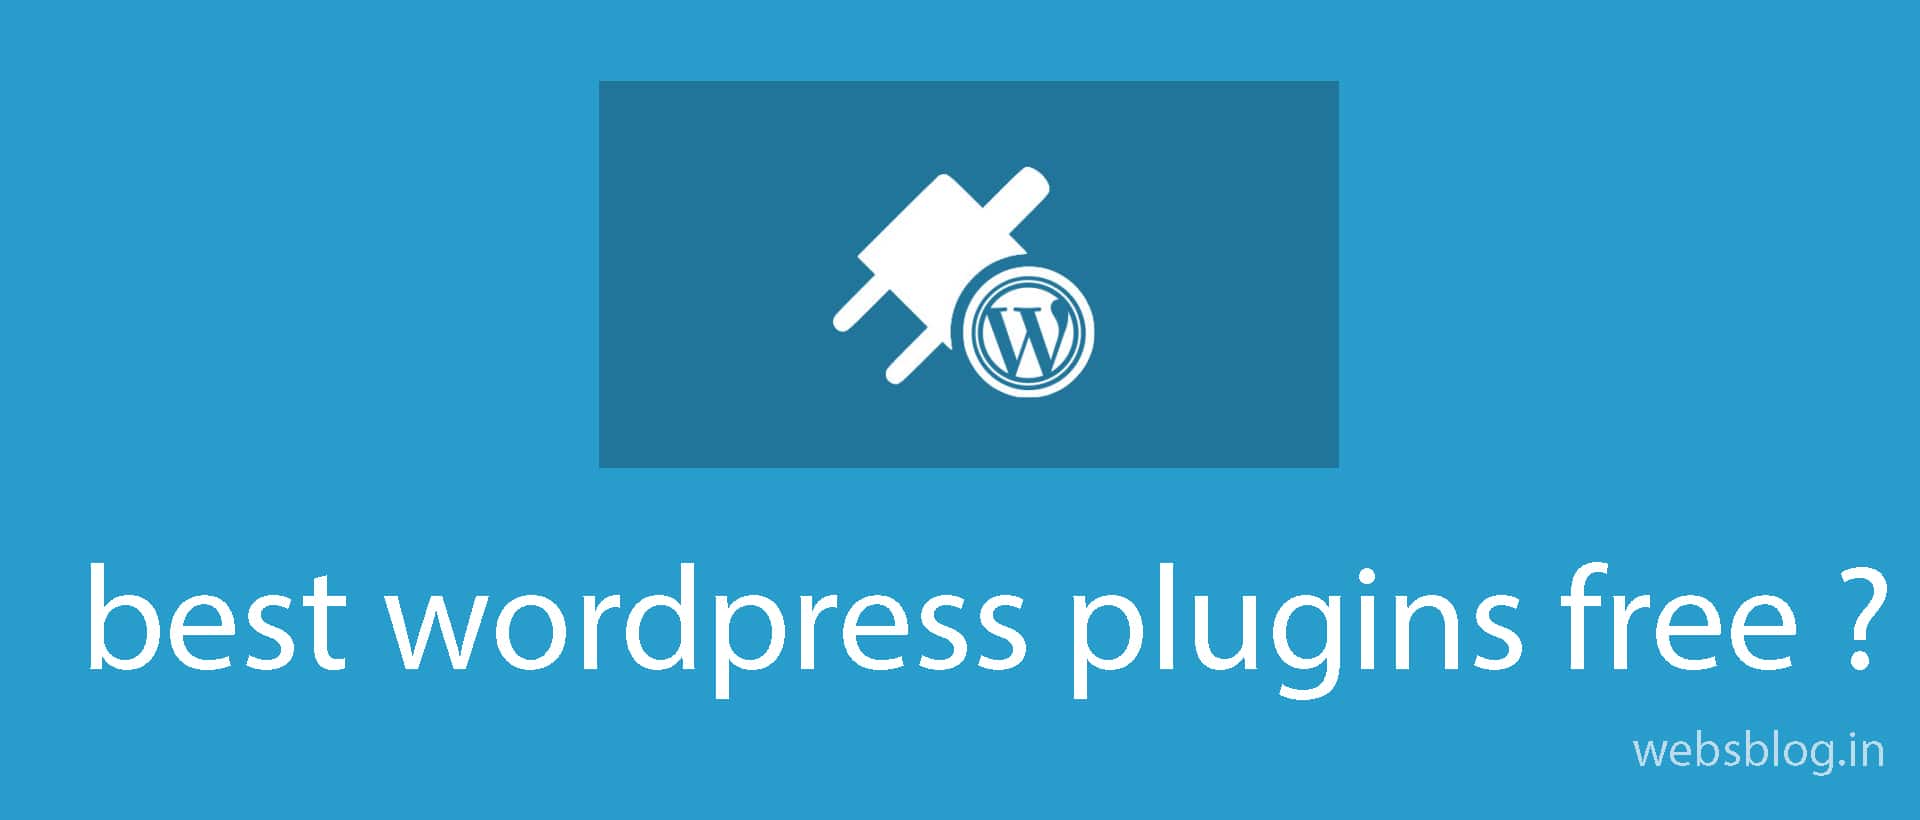 best wordpress plugins free